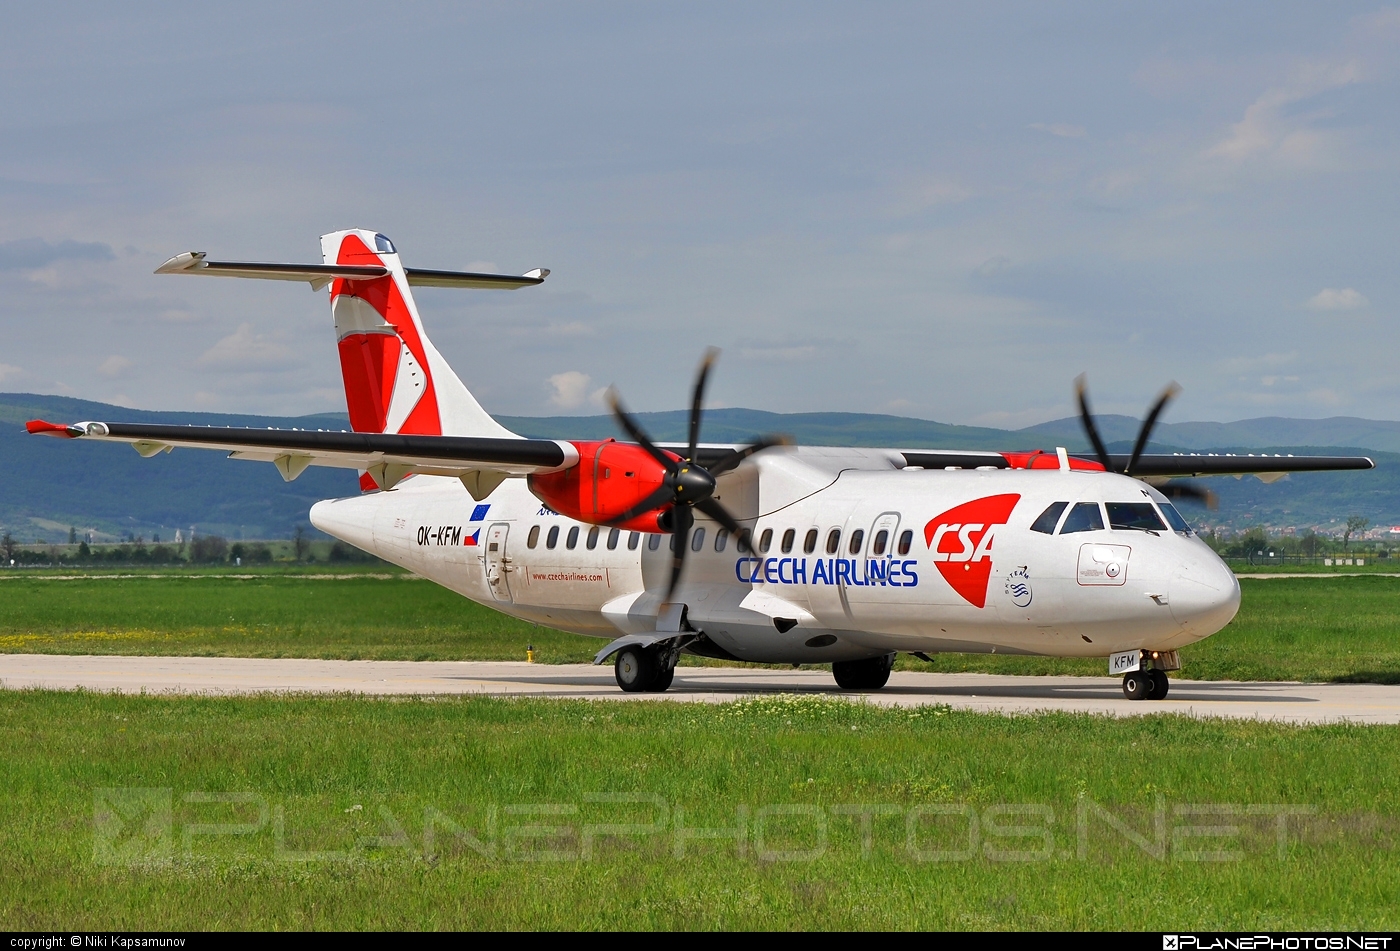 ATR 42-500 - OK-KFM operated by CSA Czech Airlines #atr #atr42 #atr42500 #csa #czechairlines